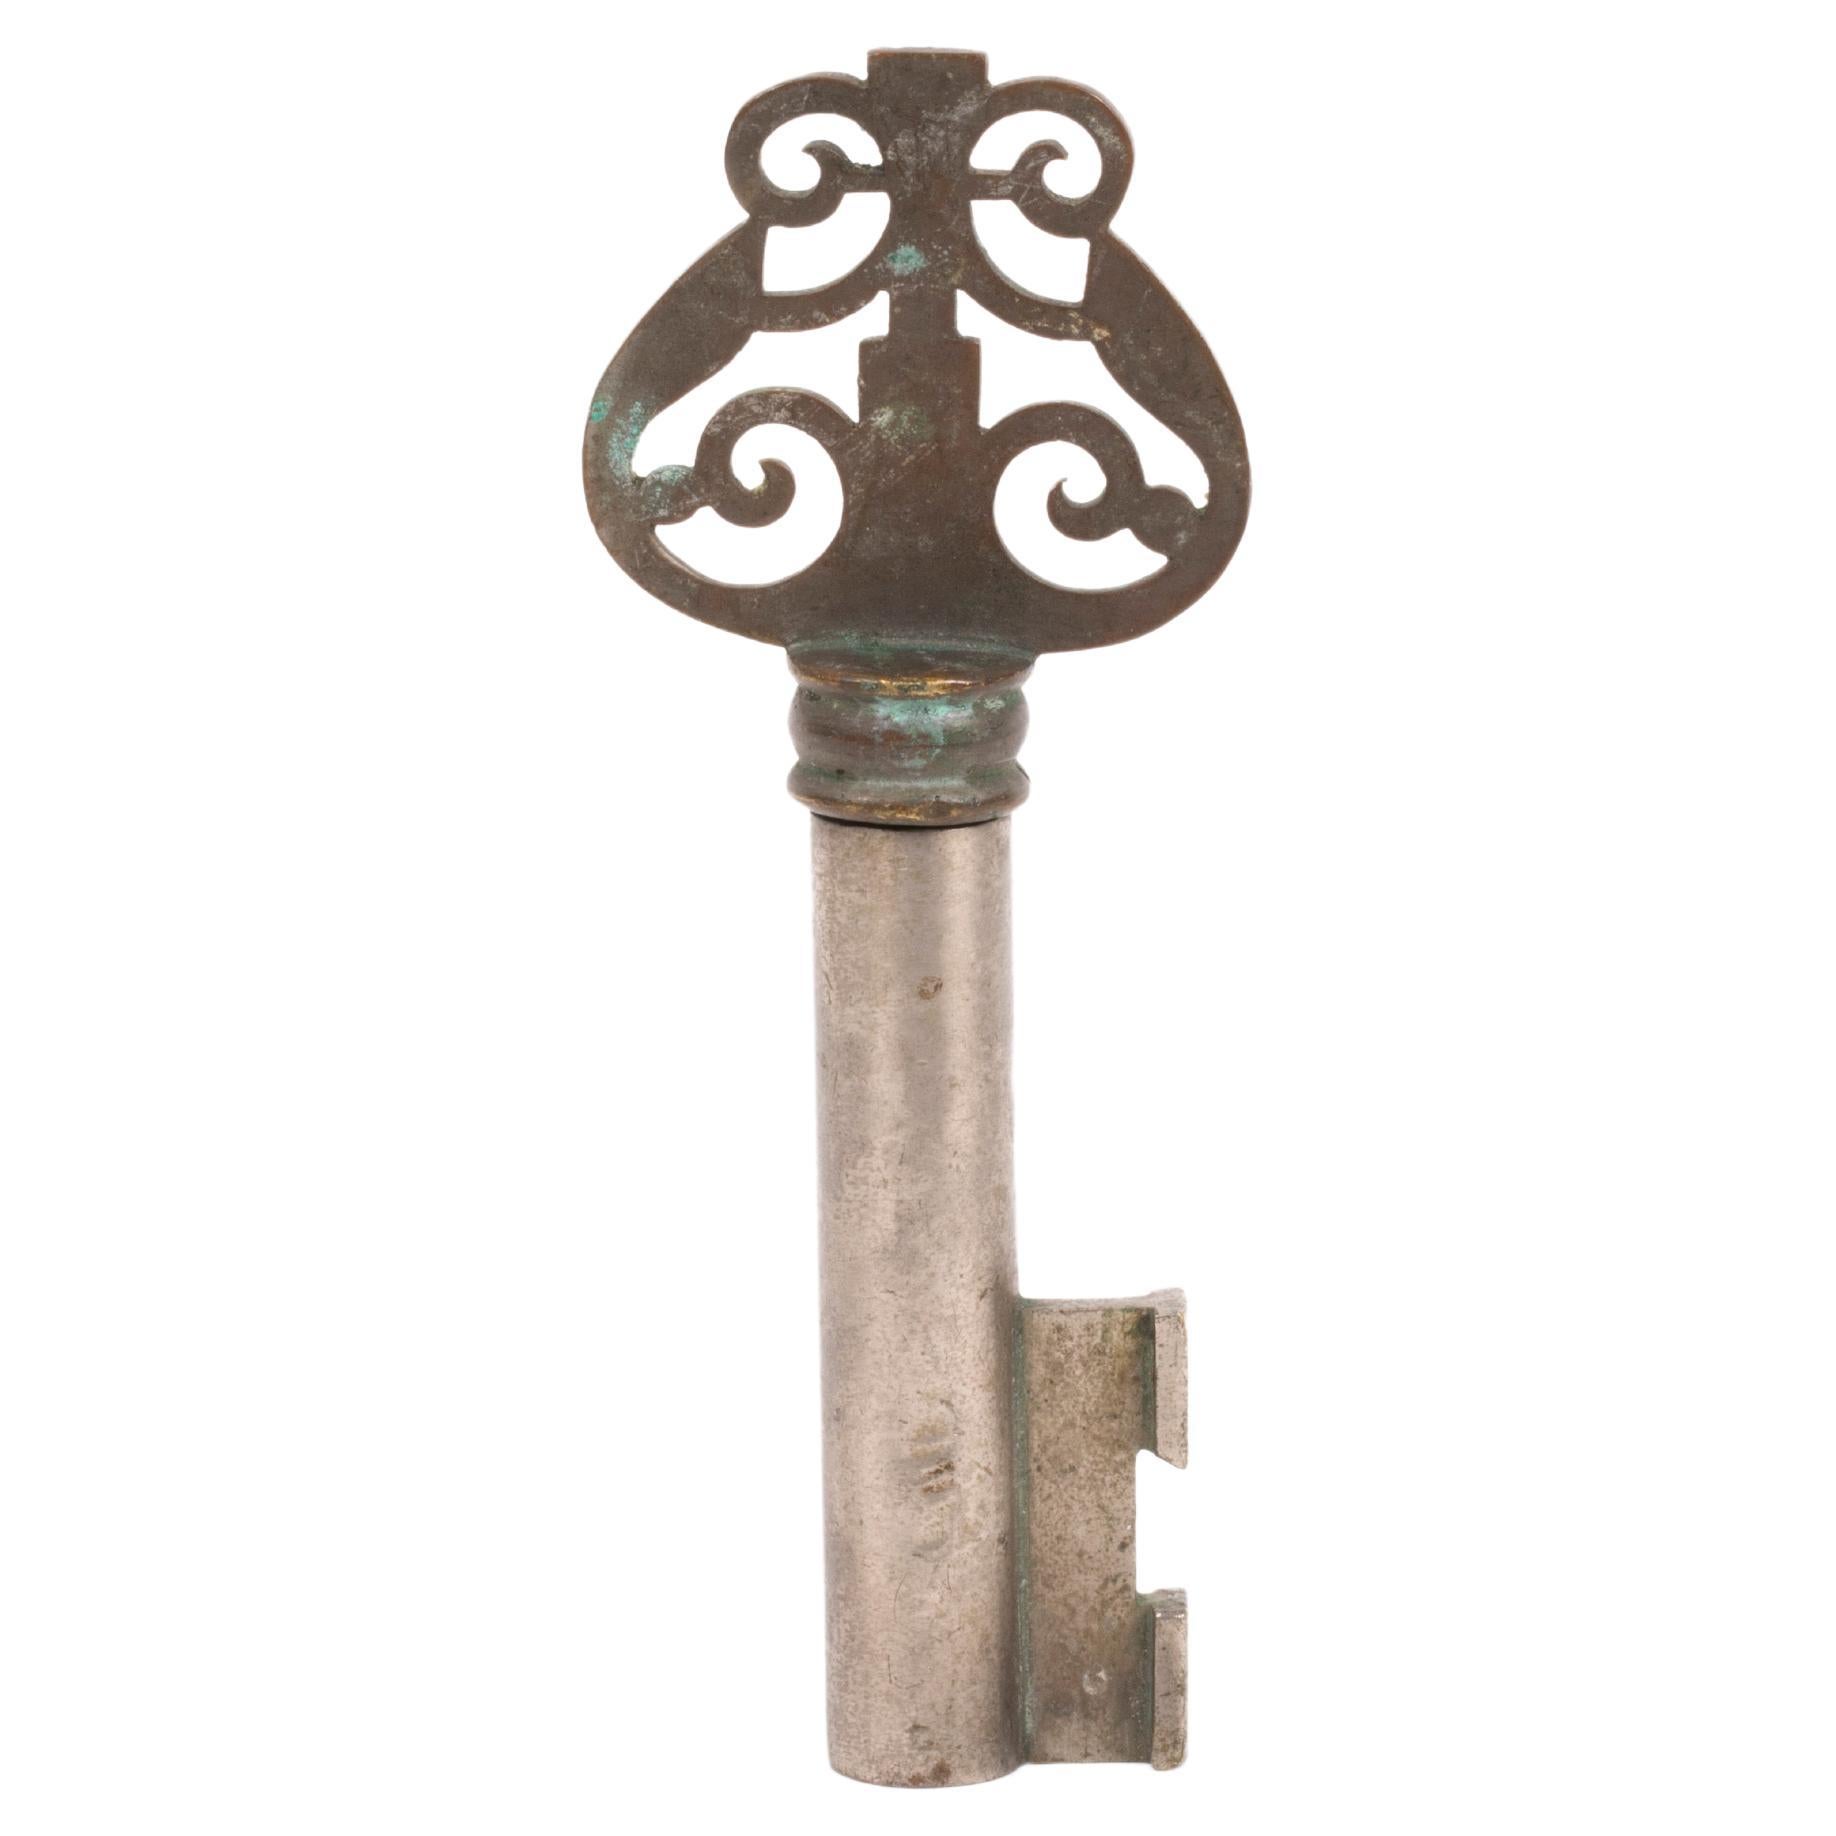 Carl Auböck cork screw, Austria 1960s.